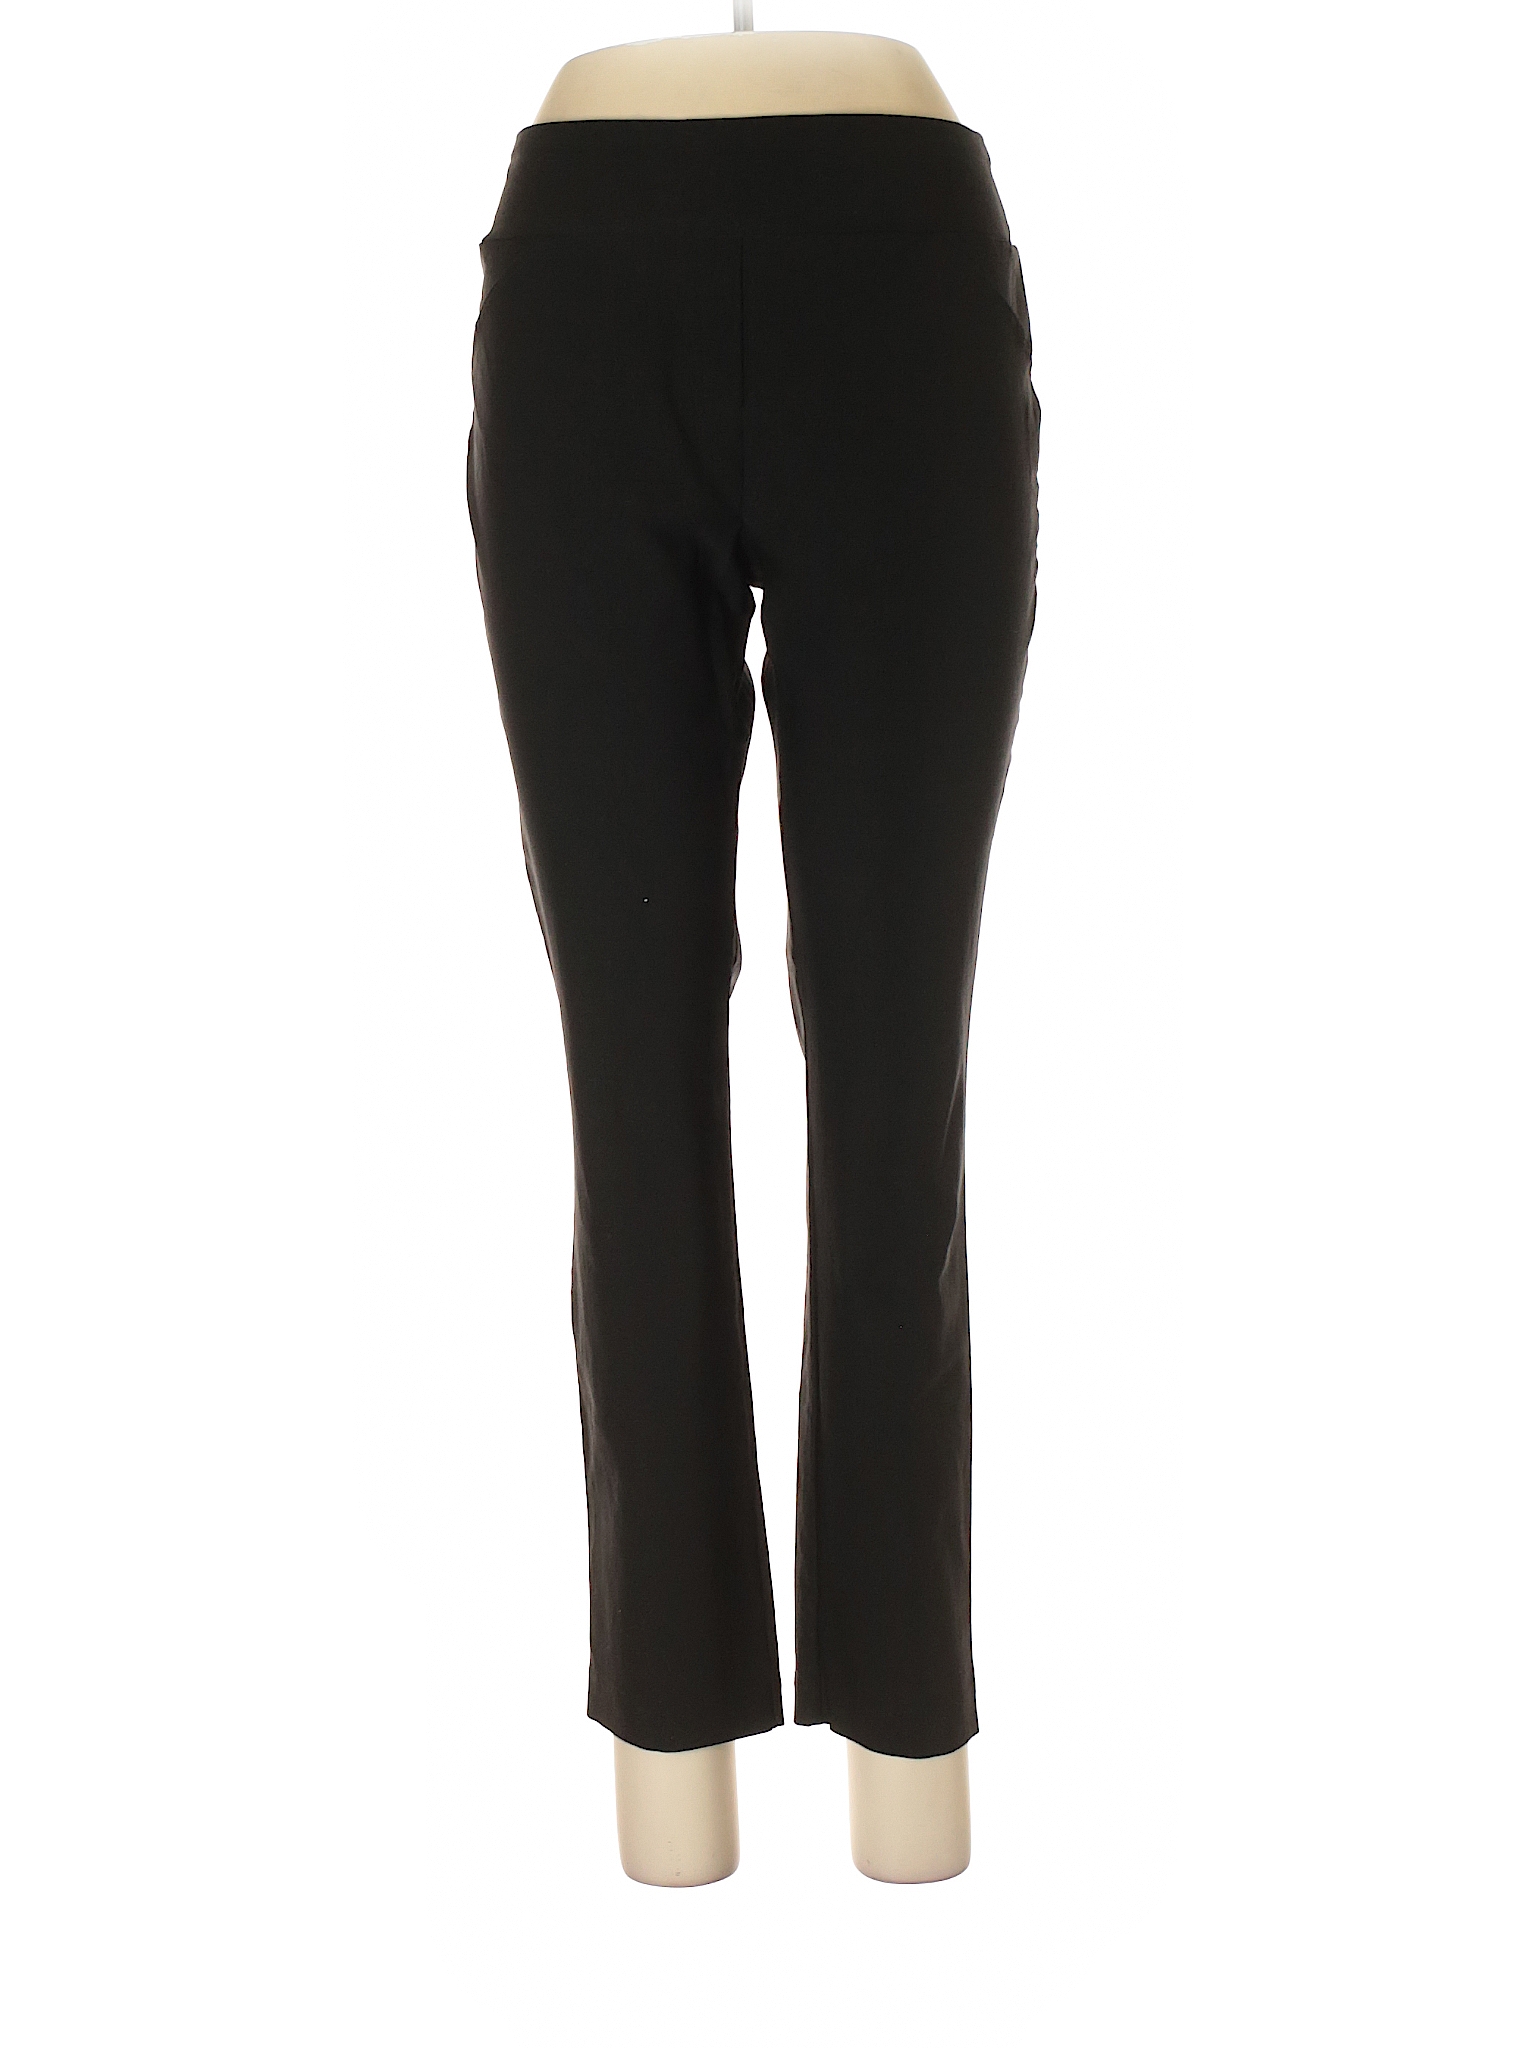 Jules & Leopold Solid Black Casual Pants Size L - 77% off | thredUP